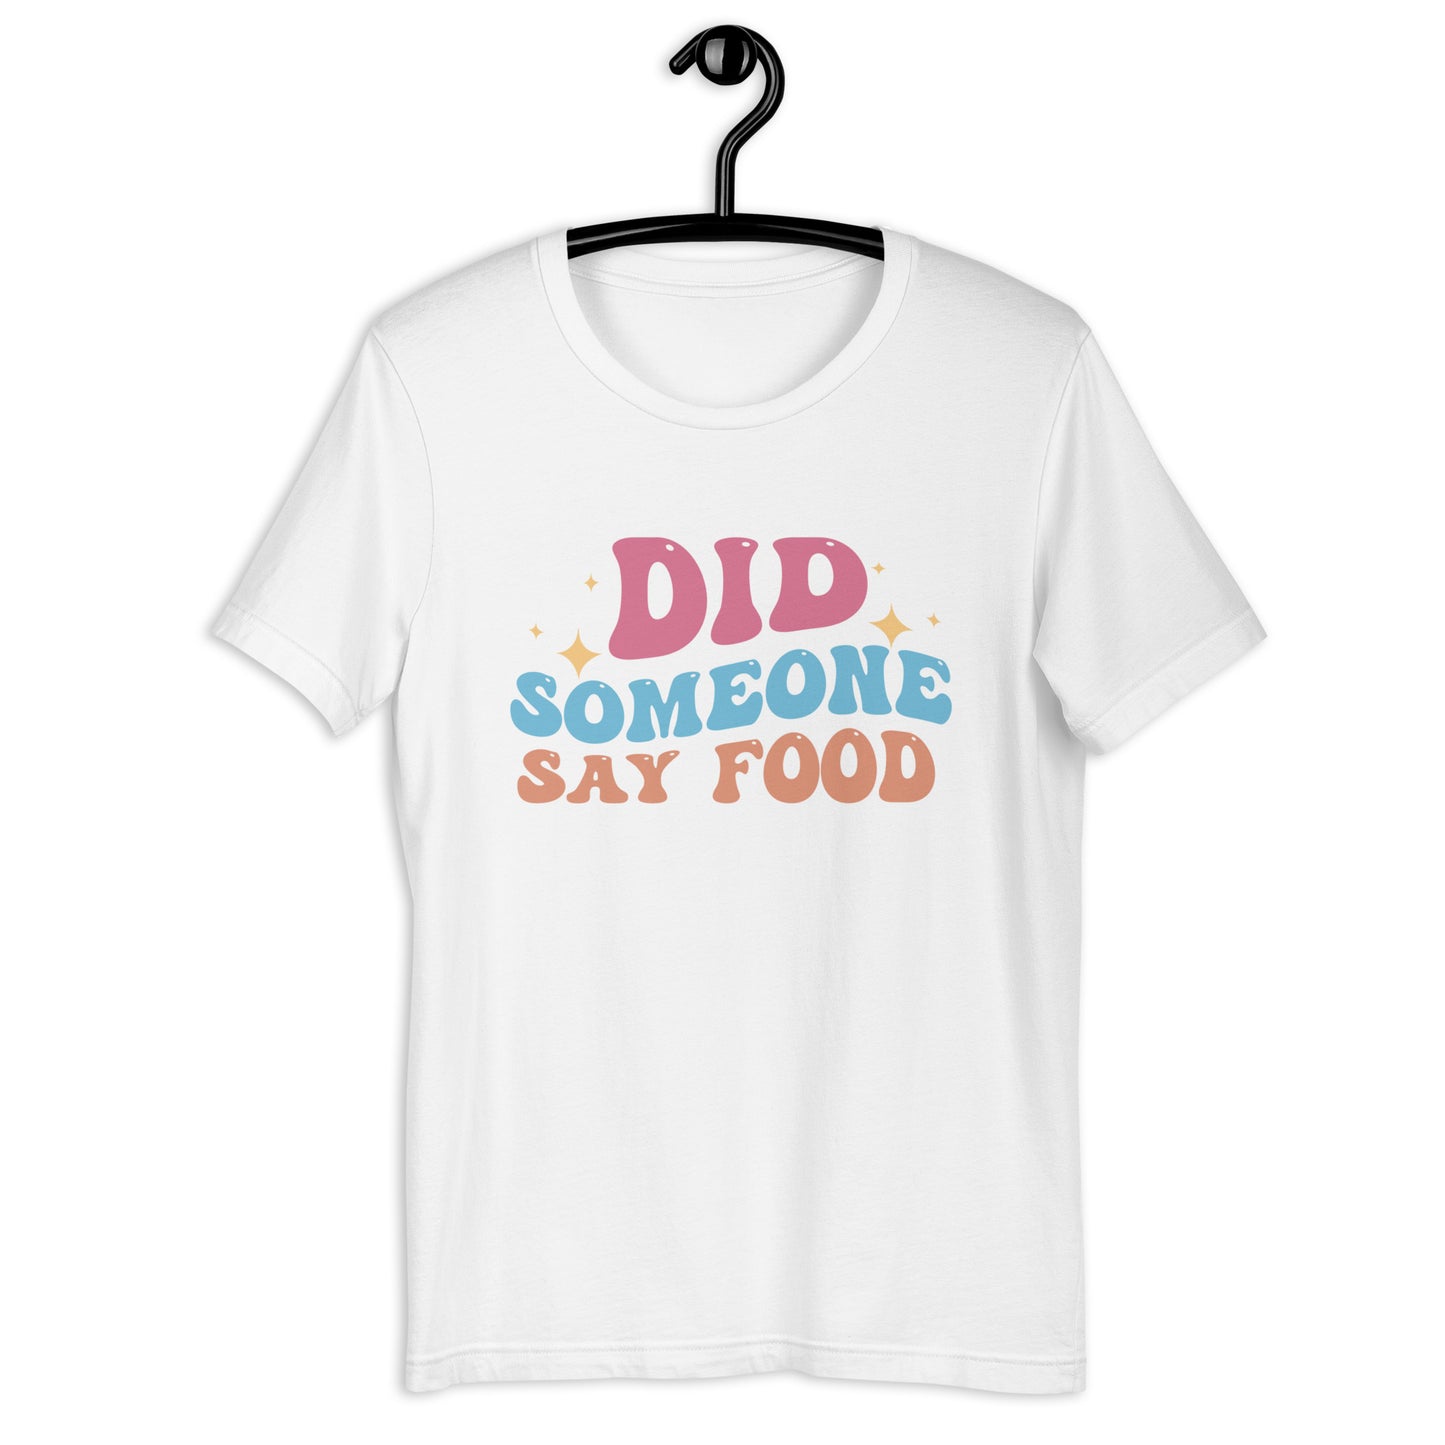 Did someone say food  t-shirt